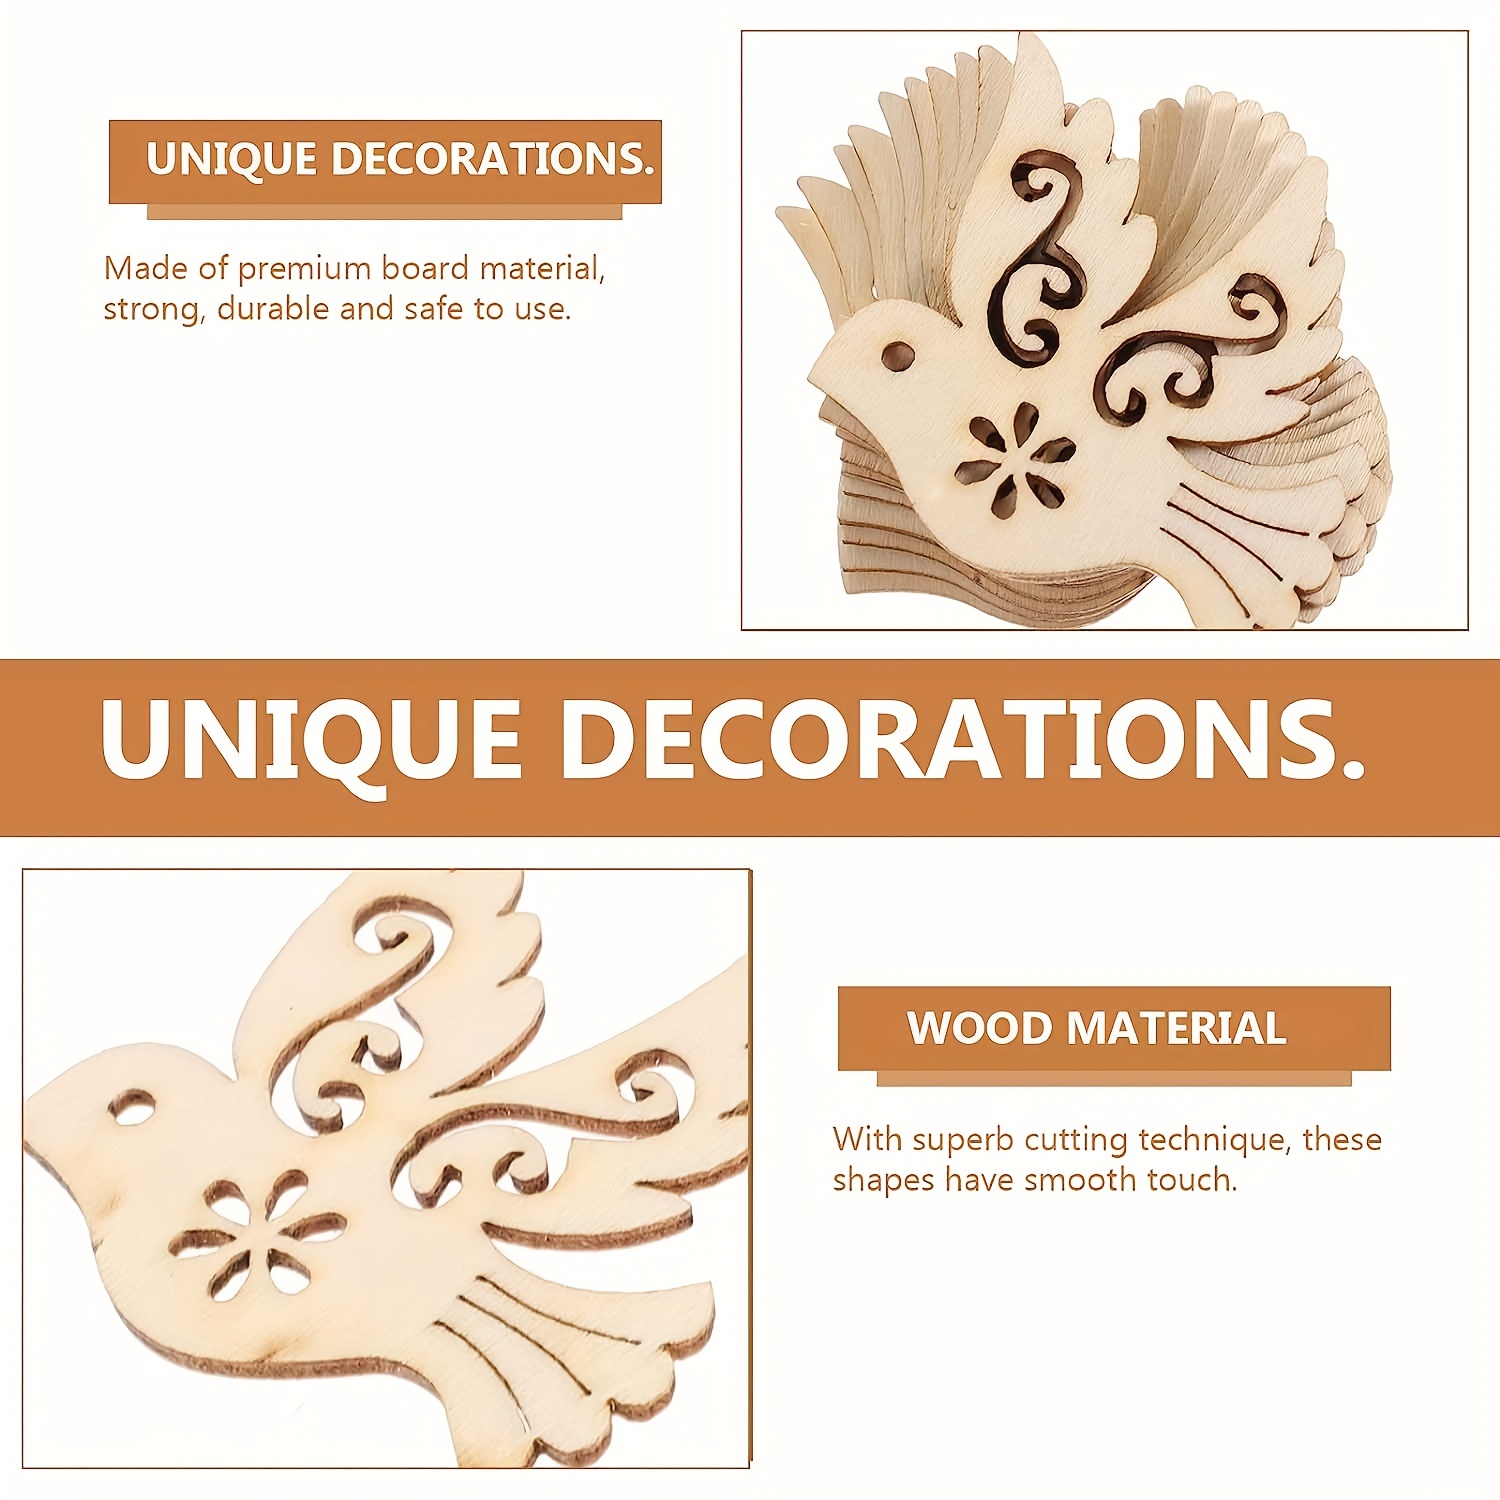 Wooden Crafts, Wooden Shapes, Wooden Cutouts, Wooden Diy Materials